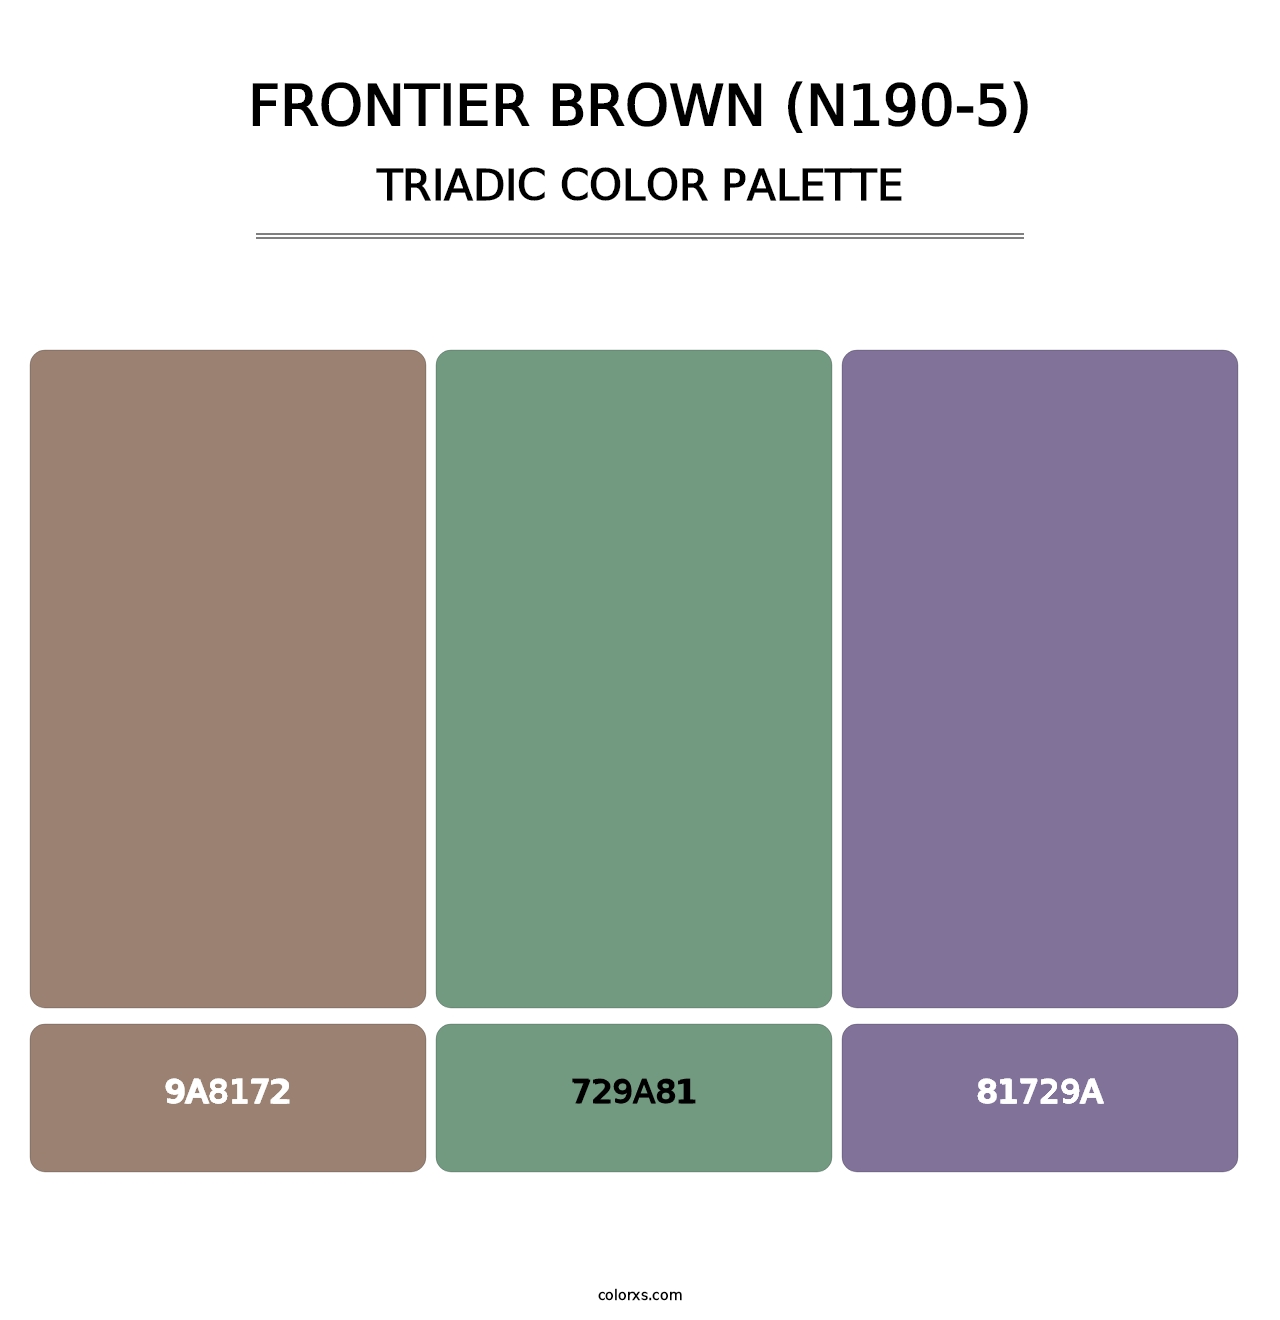 Frontier Brown (N190-5) - Triadic Color Palette